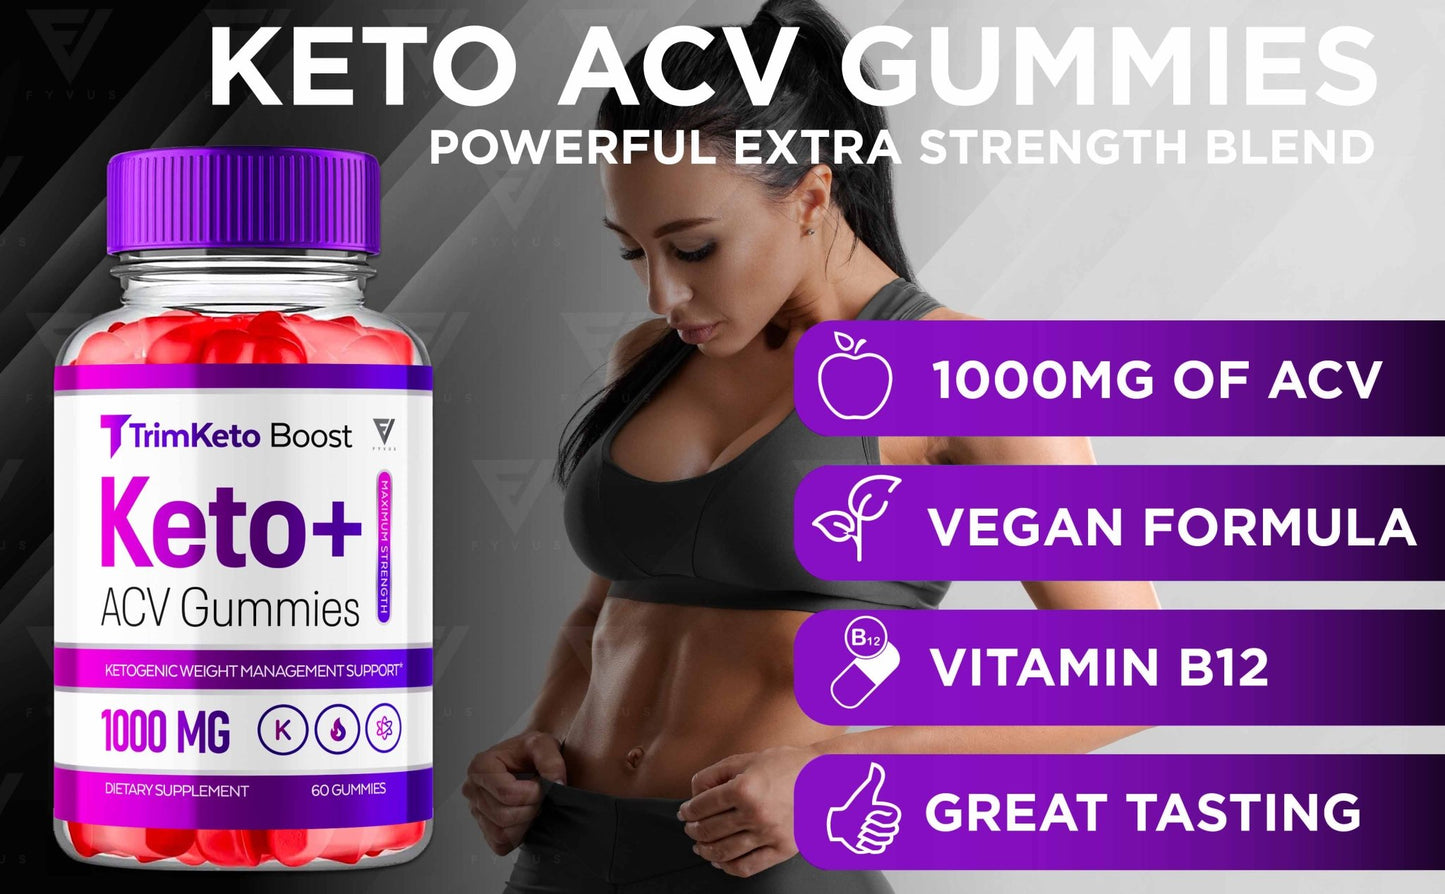 TrimKeto Boost - Keto ACV Gummies - Vitamin Place